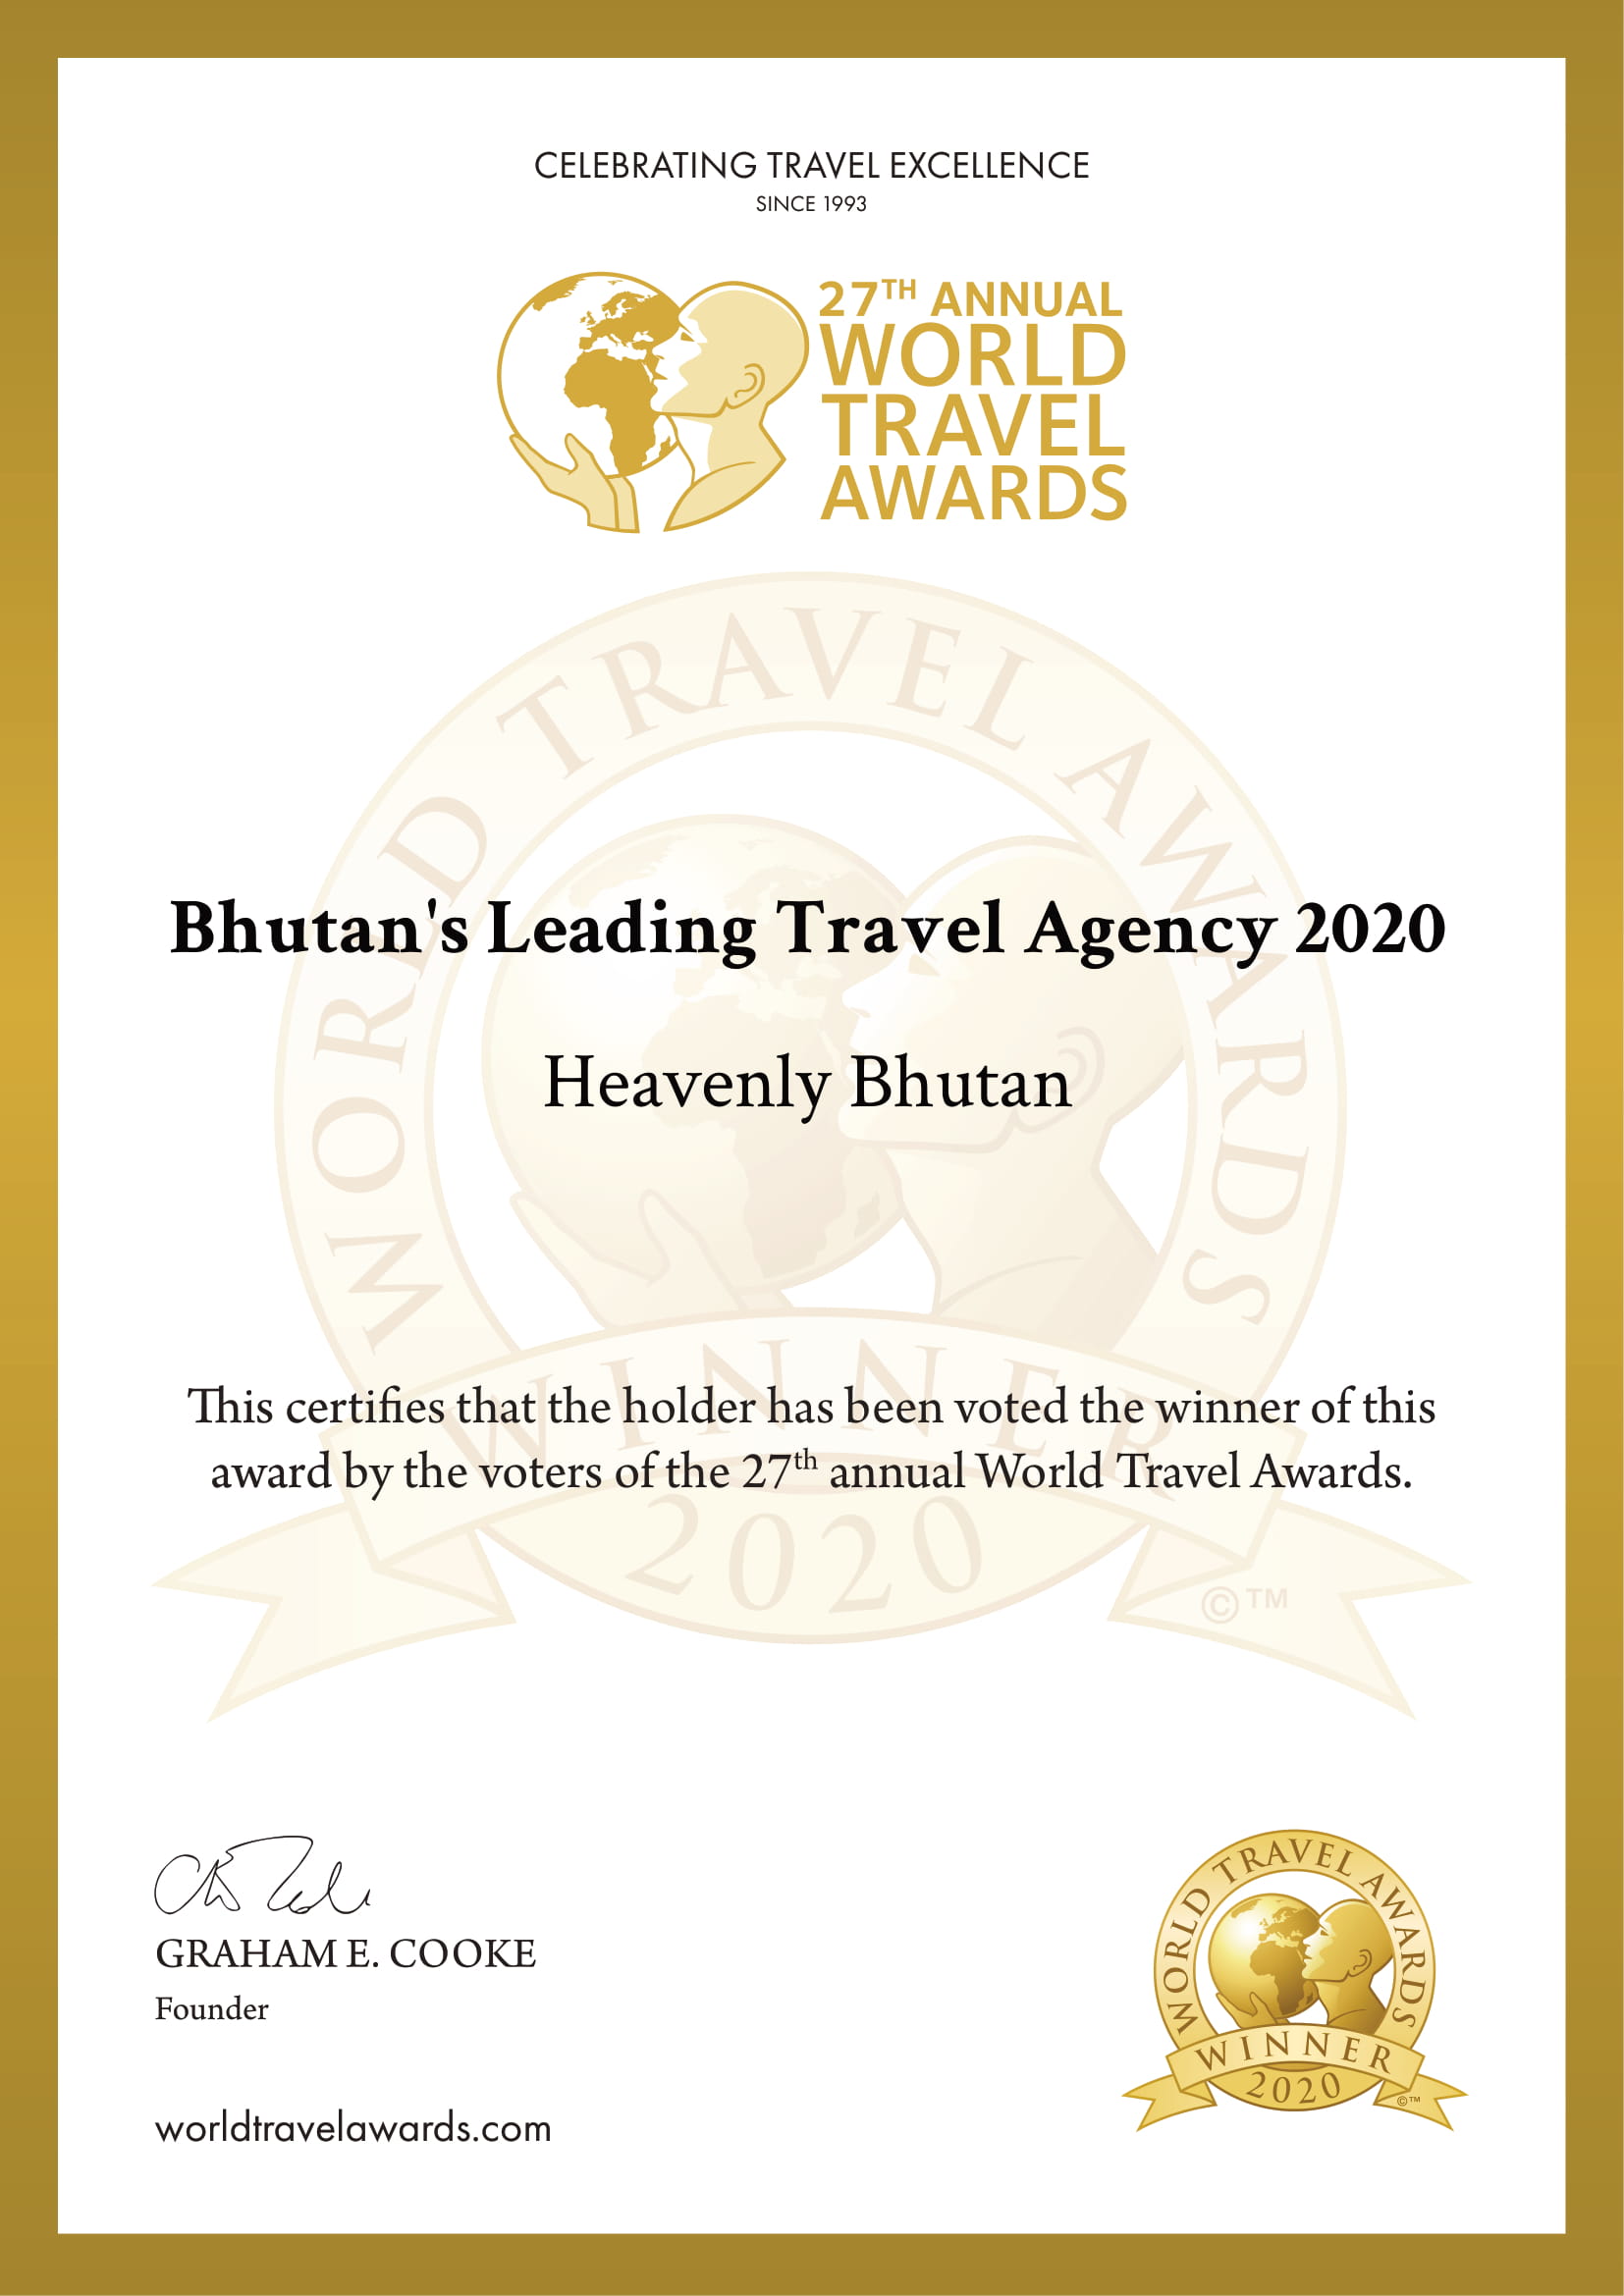 Bhutan's Leading Travel Agency 2020 Winner Certificate - Heavenly Bhutan